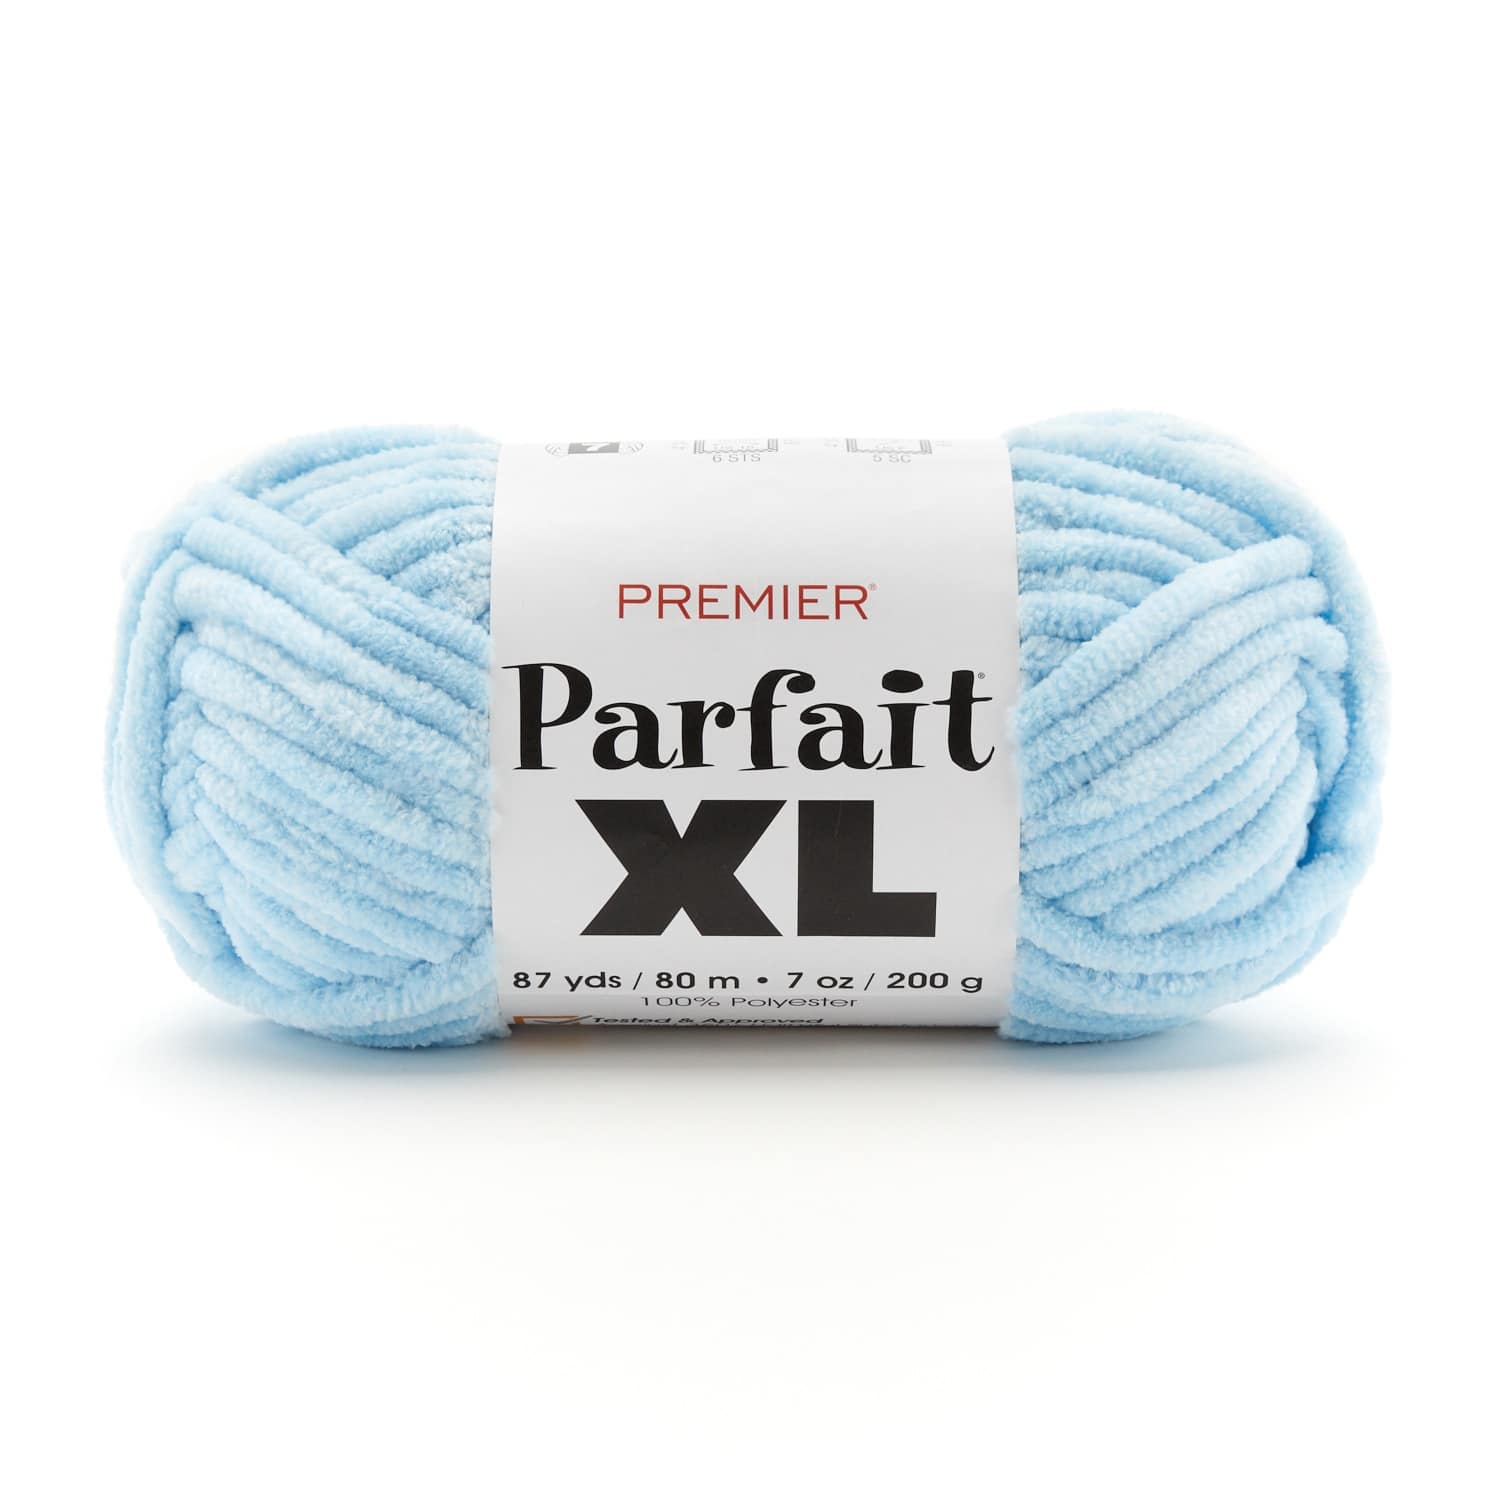 Premier Yarns Parfait Chunky Yarn-Blue